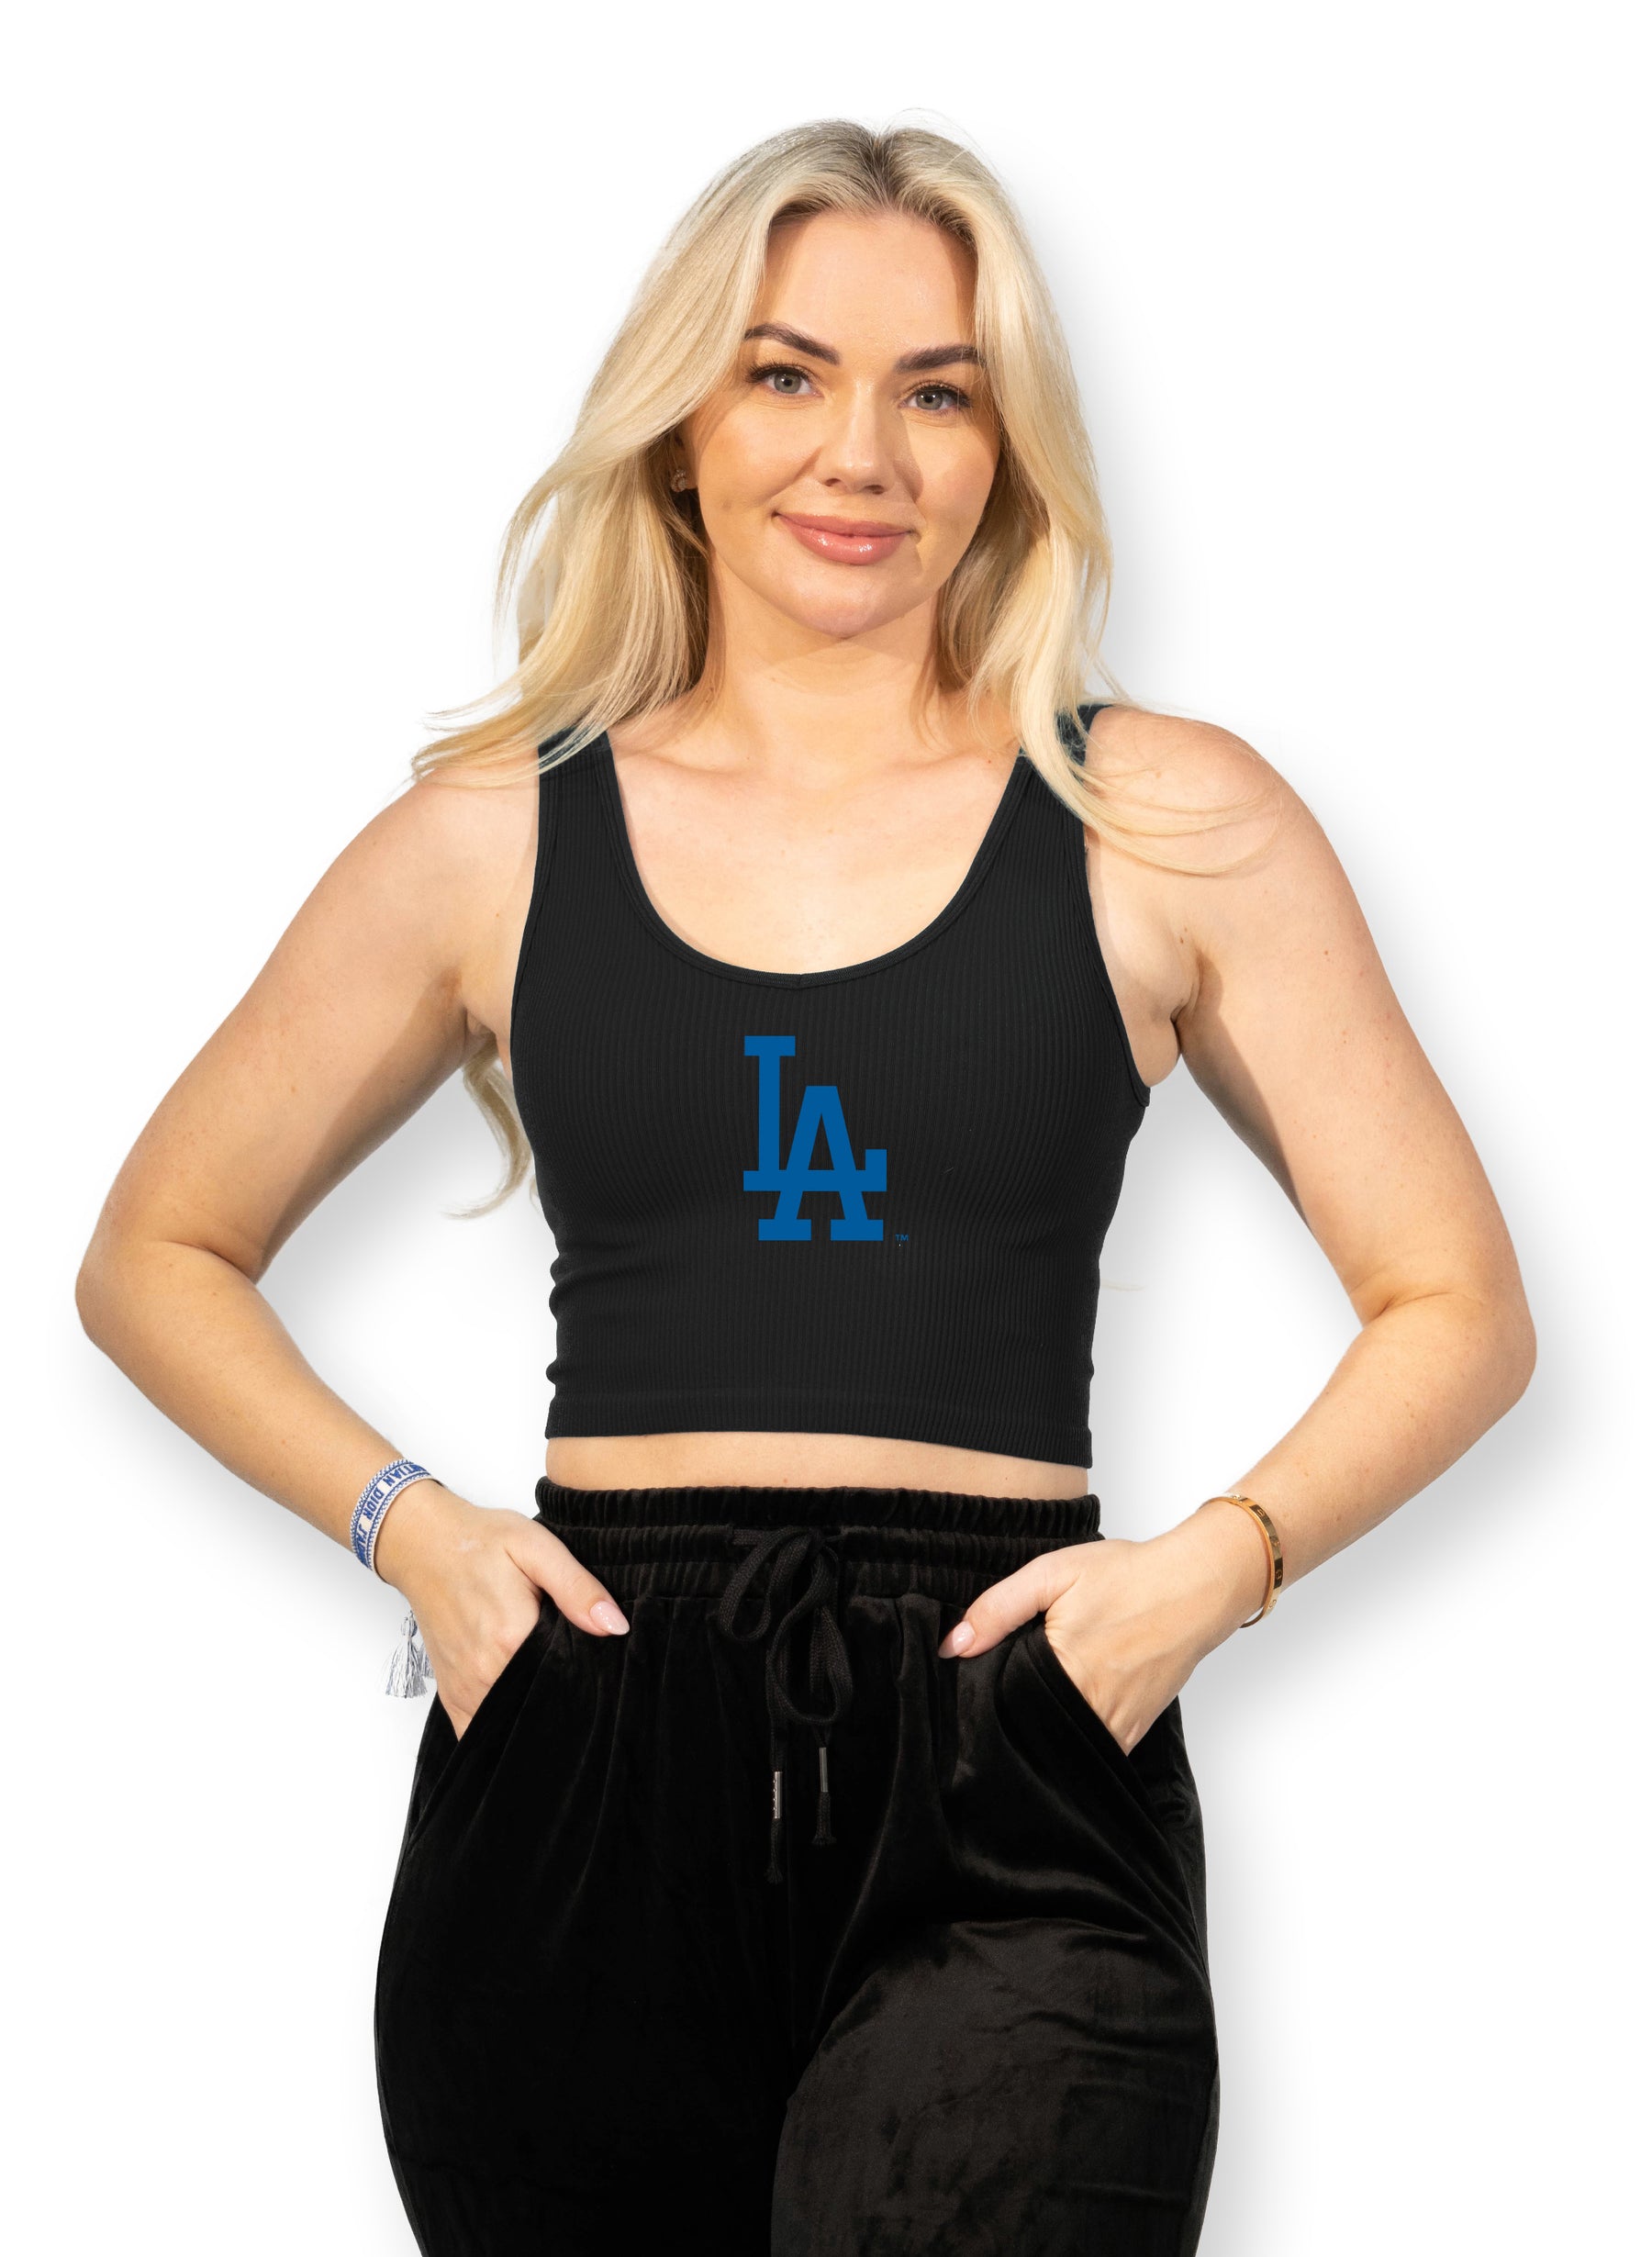 Los Angeles Dodgers Women's Apparel